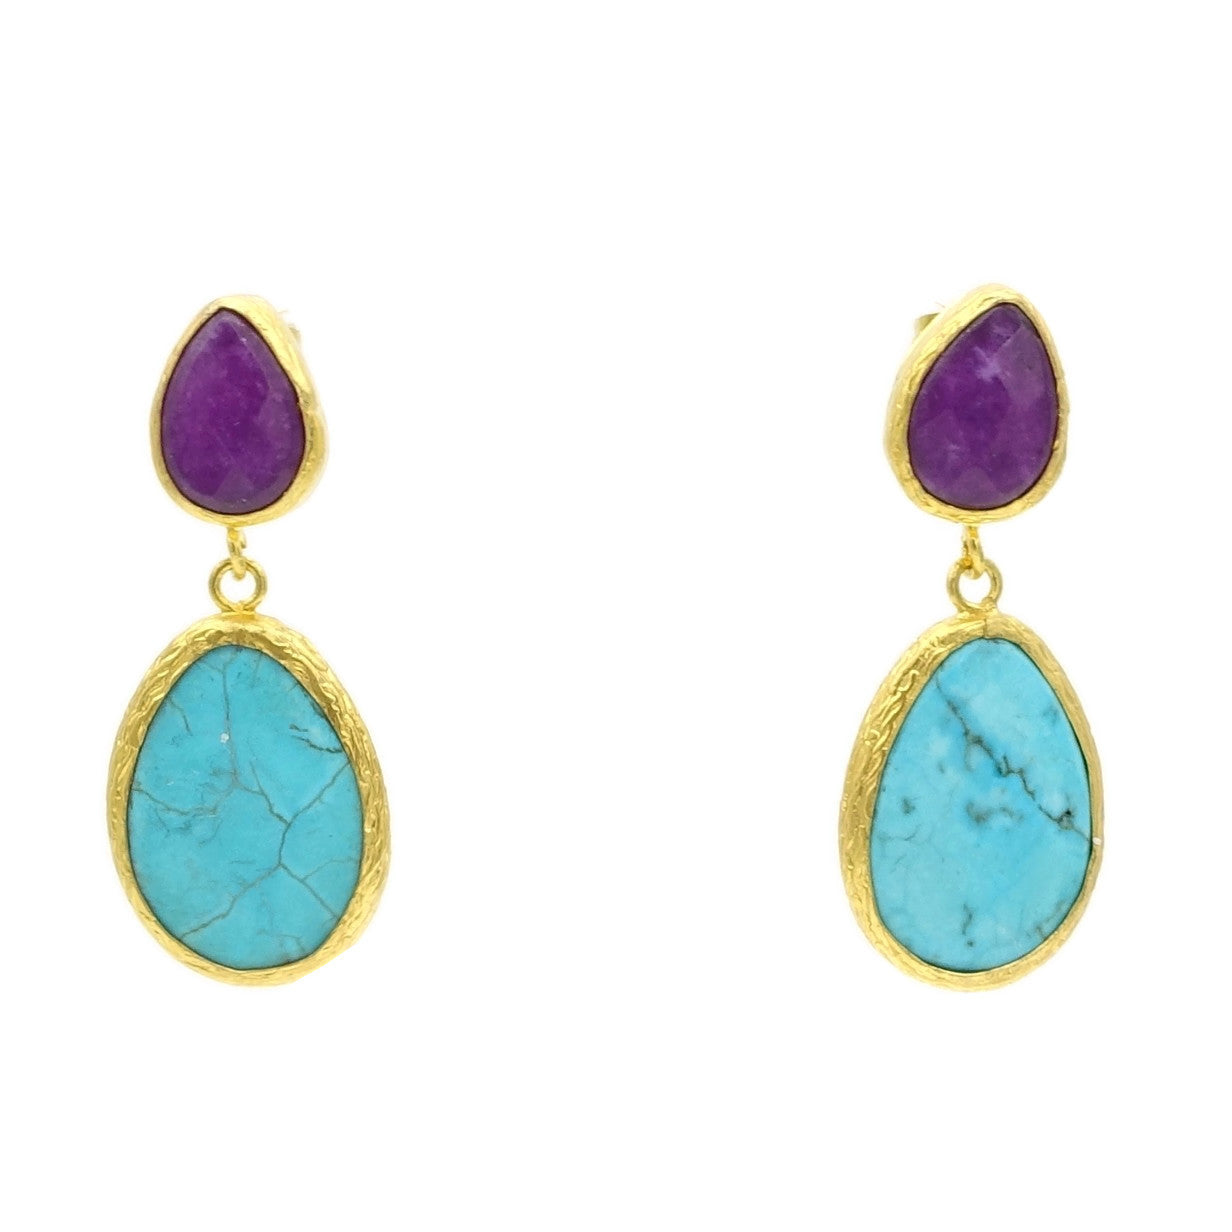 Aylas Turquoise Agate semi precious gemstone earrings - 21ct Gold plated handmade